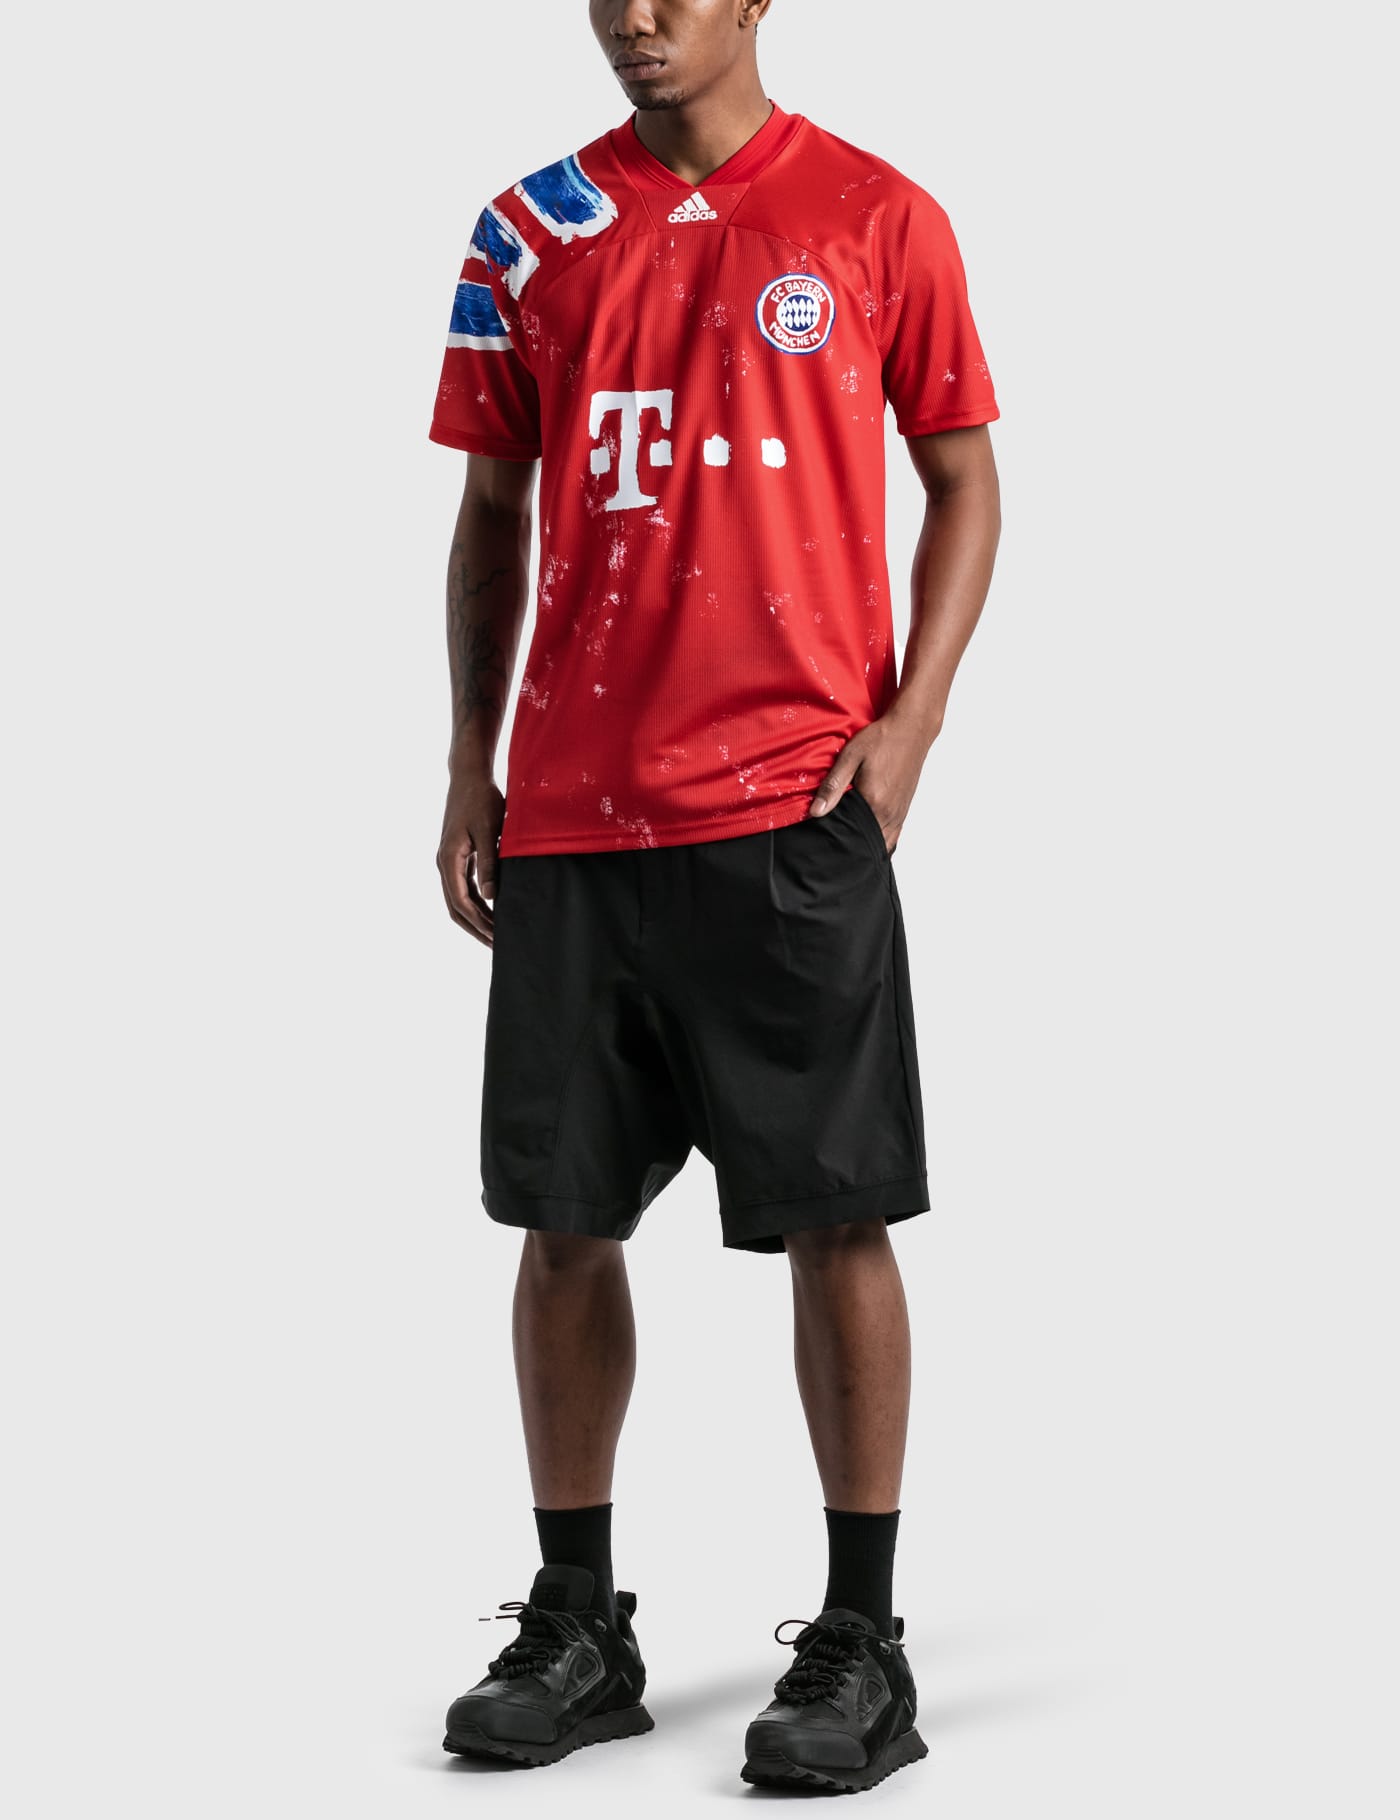 Adidas Originals - Adidas x Pharrell Williams FC Bayern